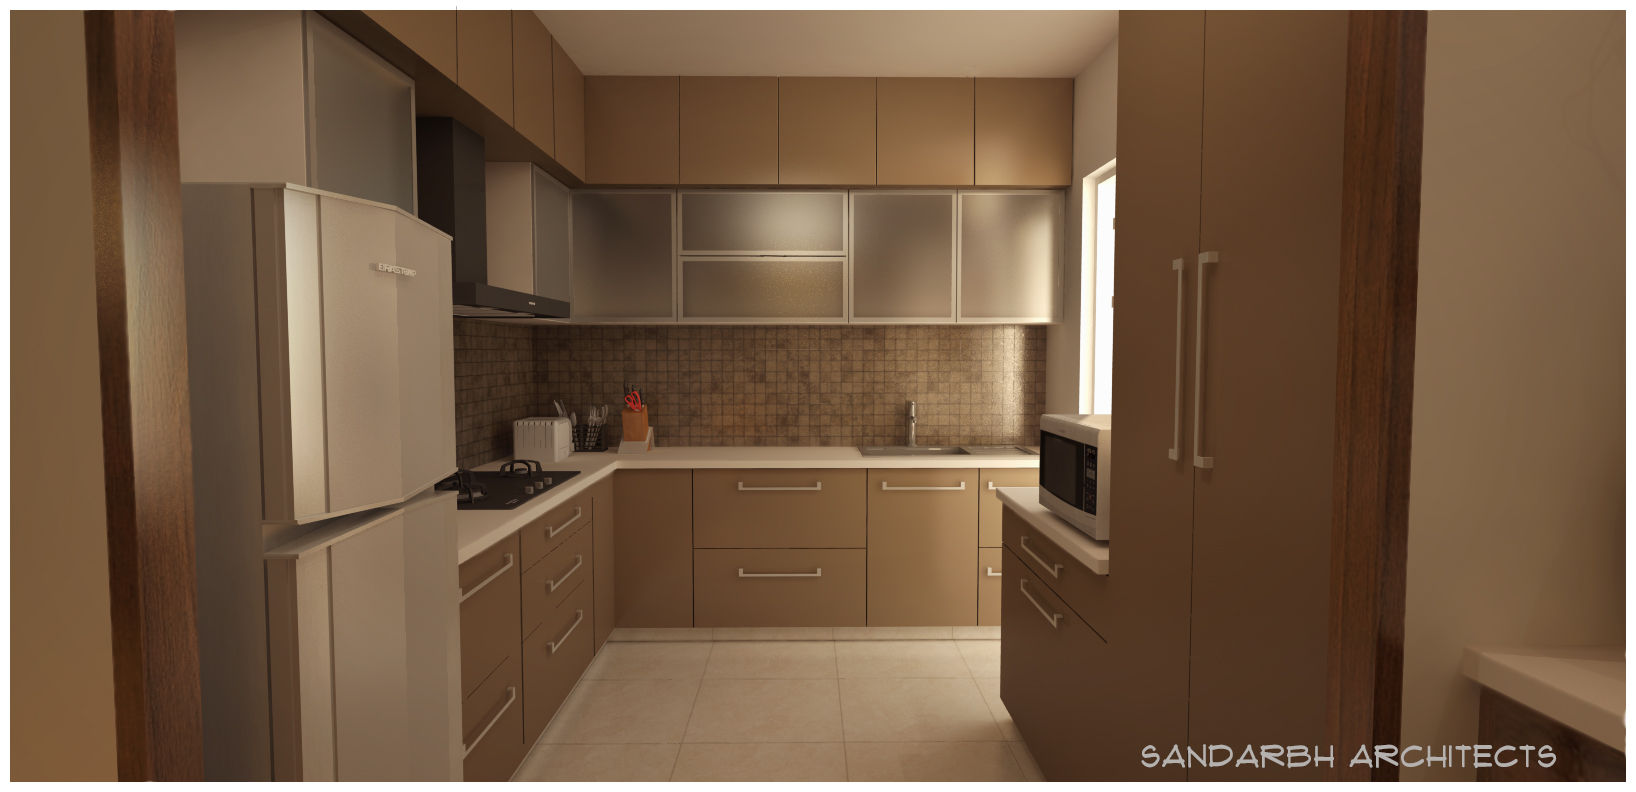 Kitchen Sandarbh Design Studio Minimalist kitchen